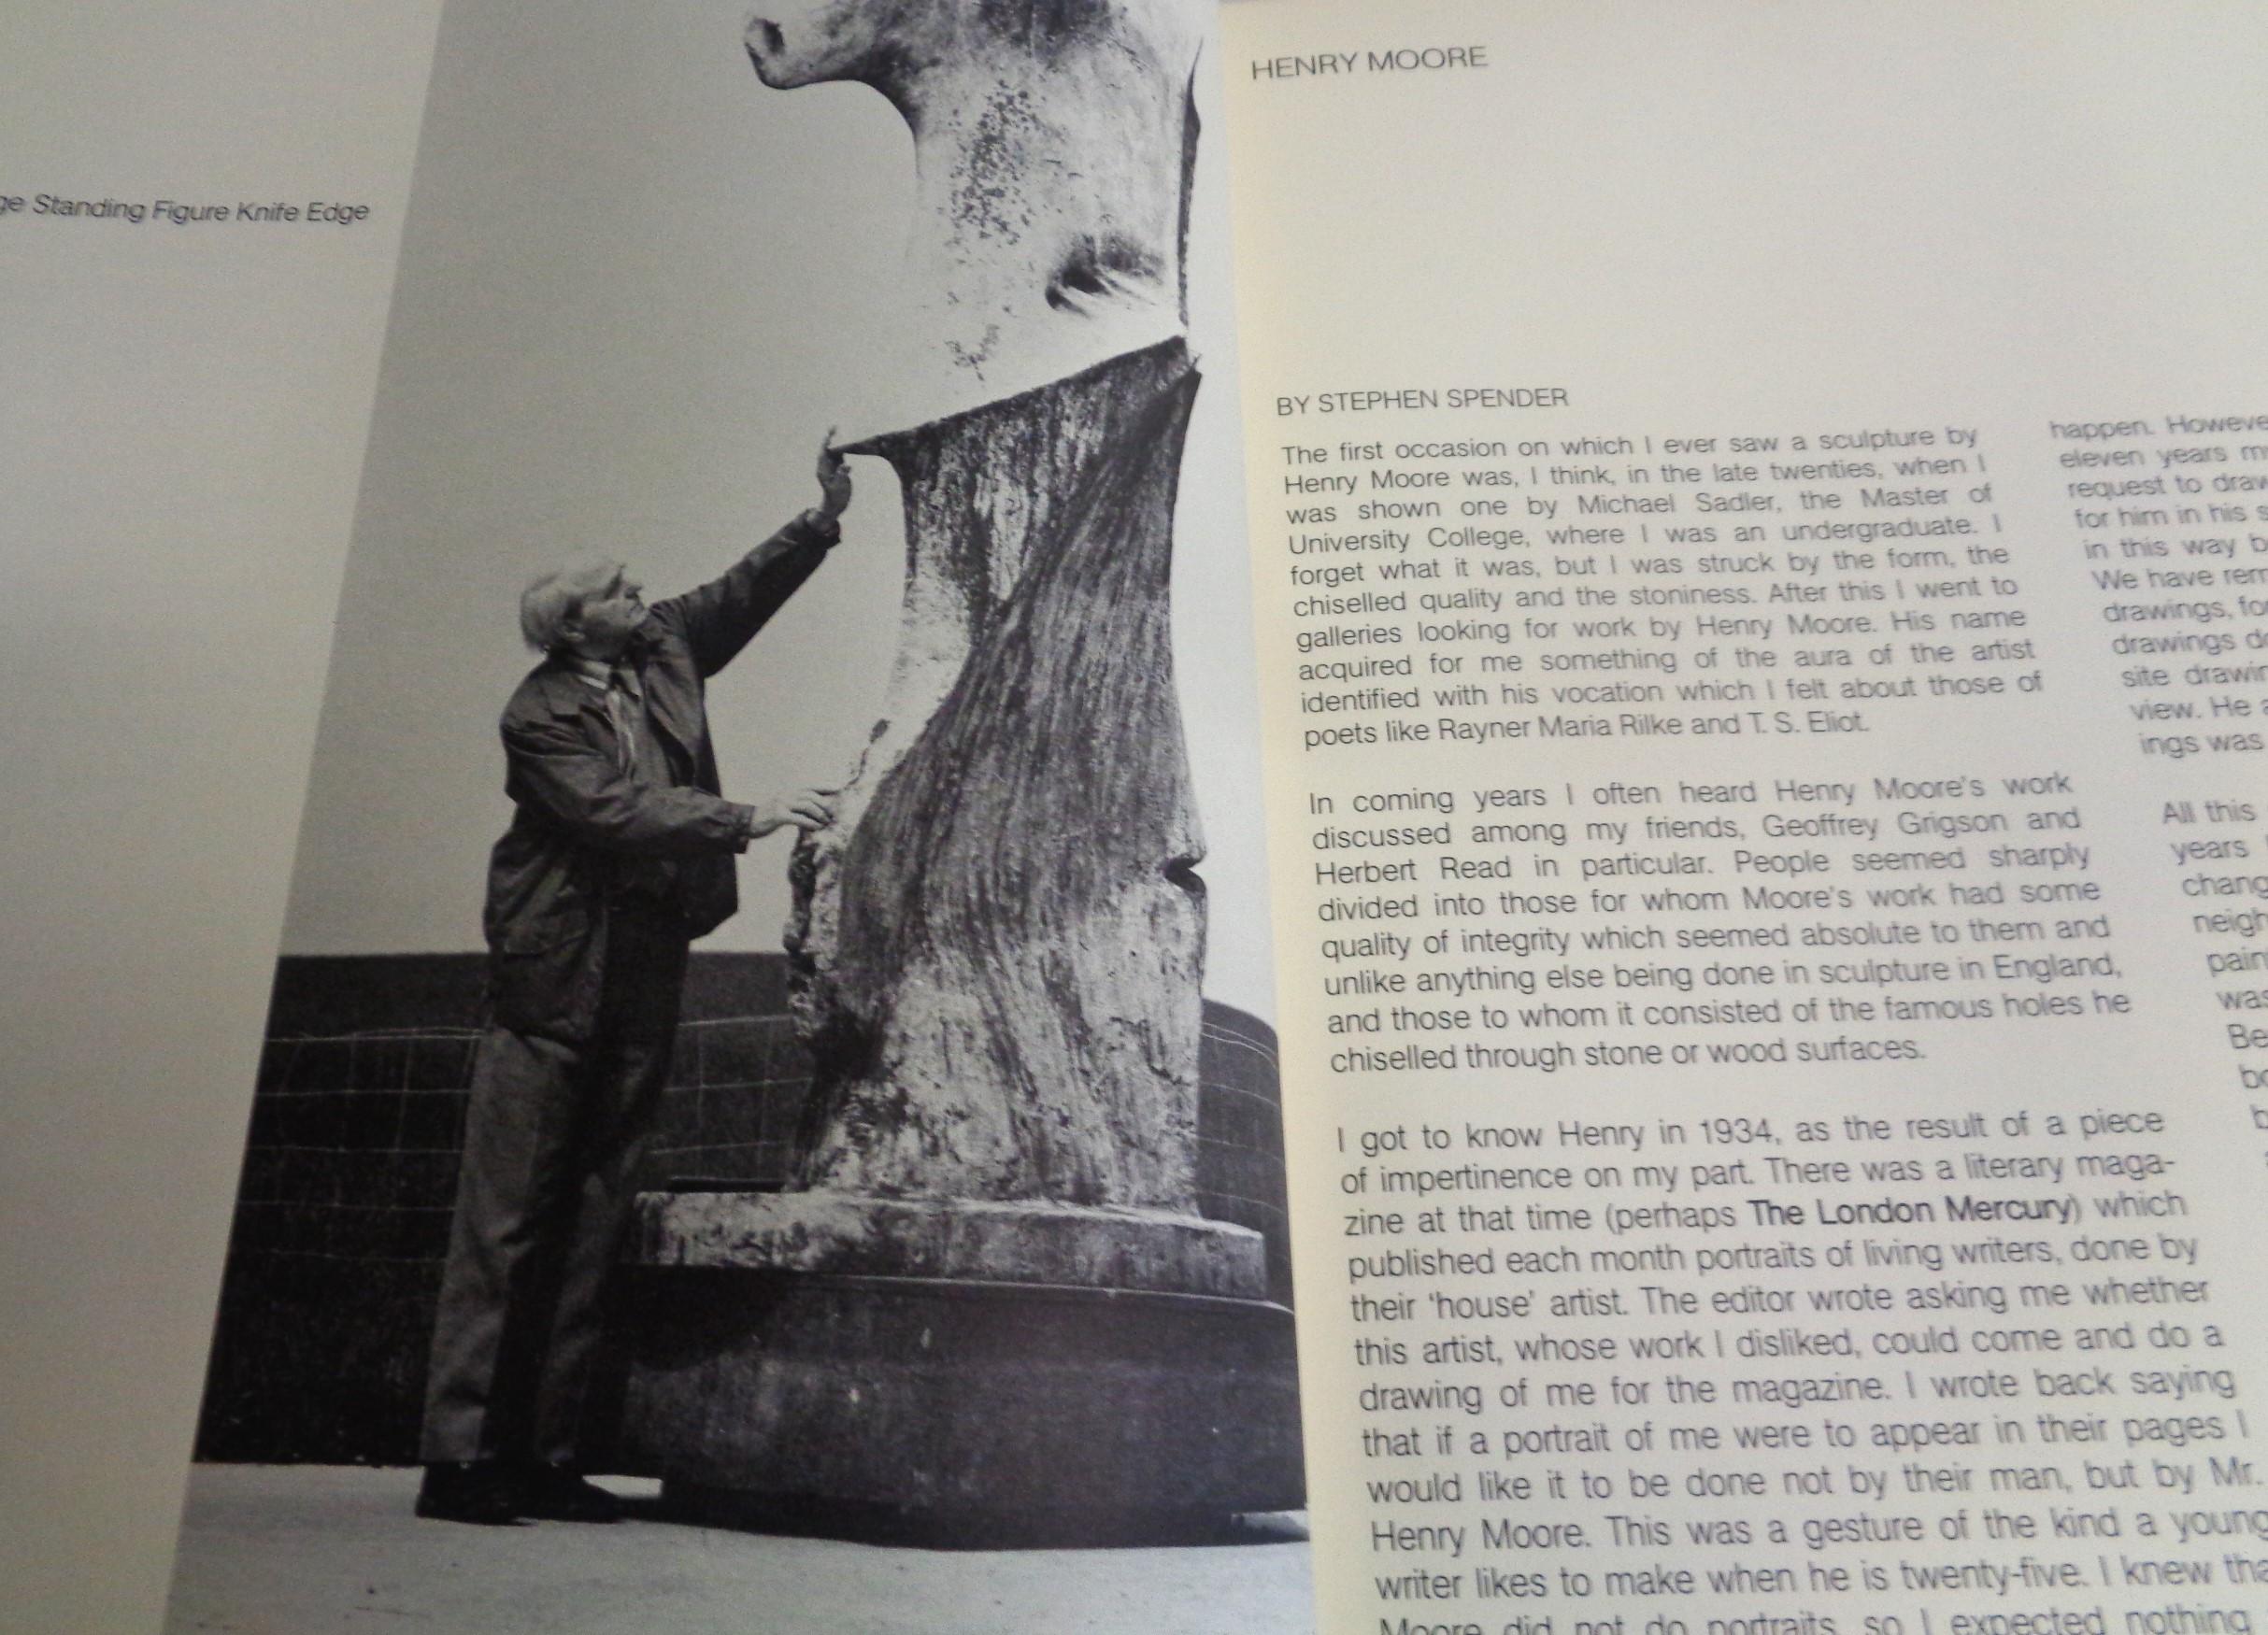 Henry Moore Sculptures in Landscape - 1978 Clarkson N. Potter - 1st Edition For Sale 4